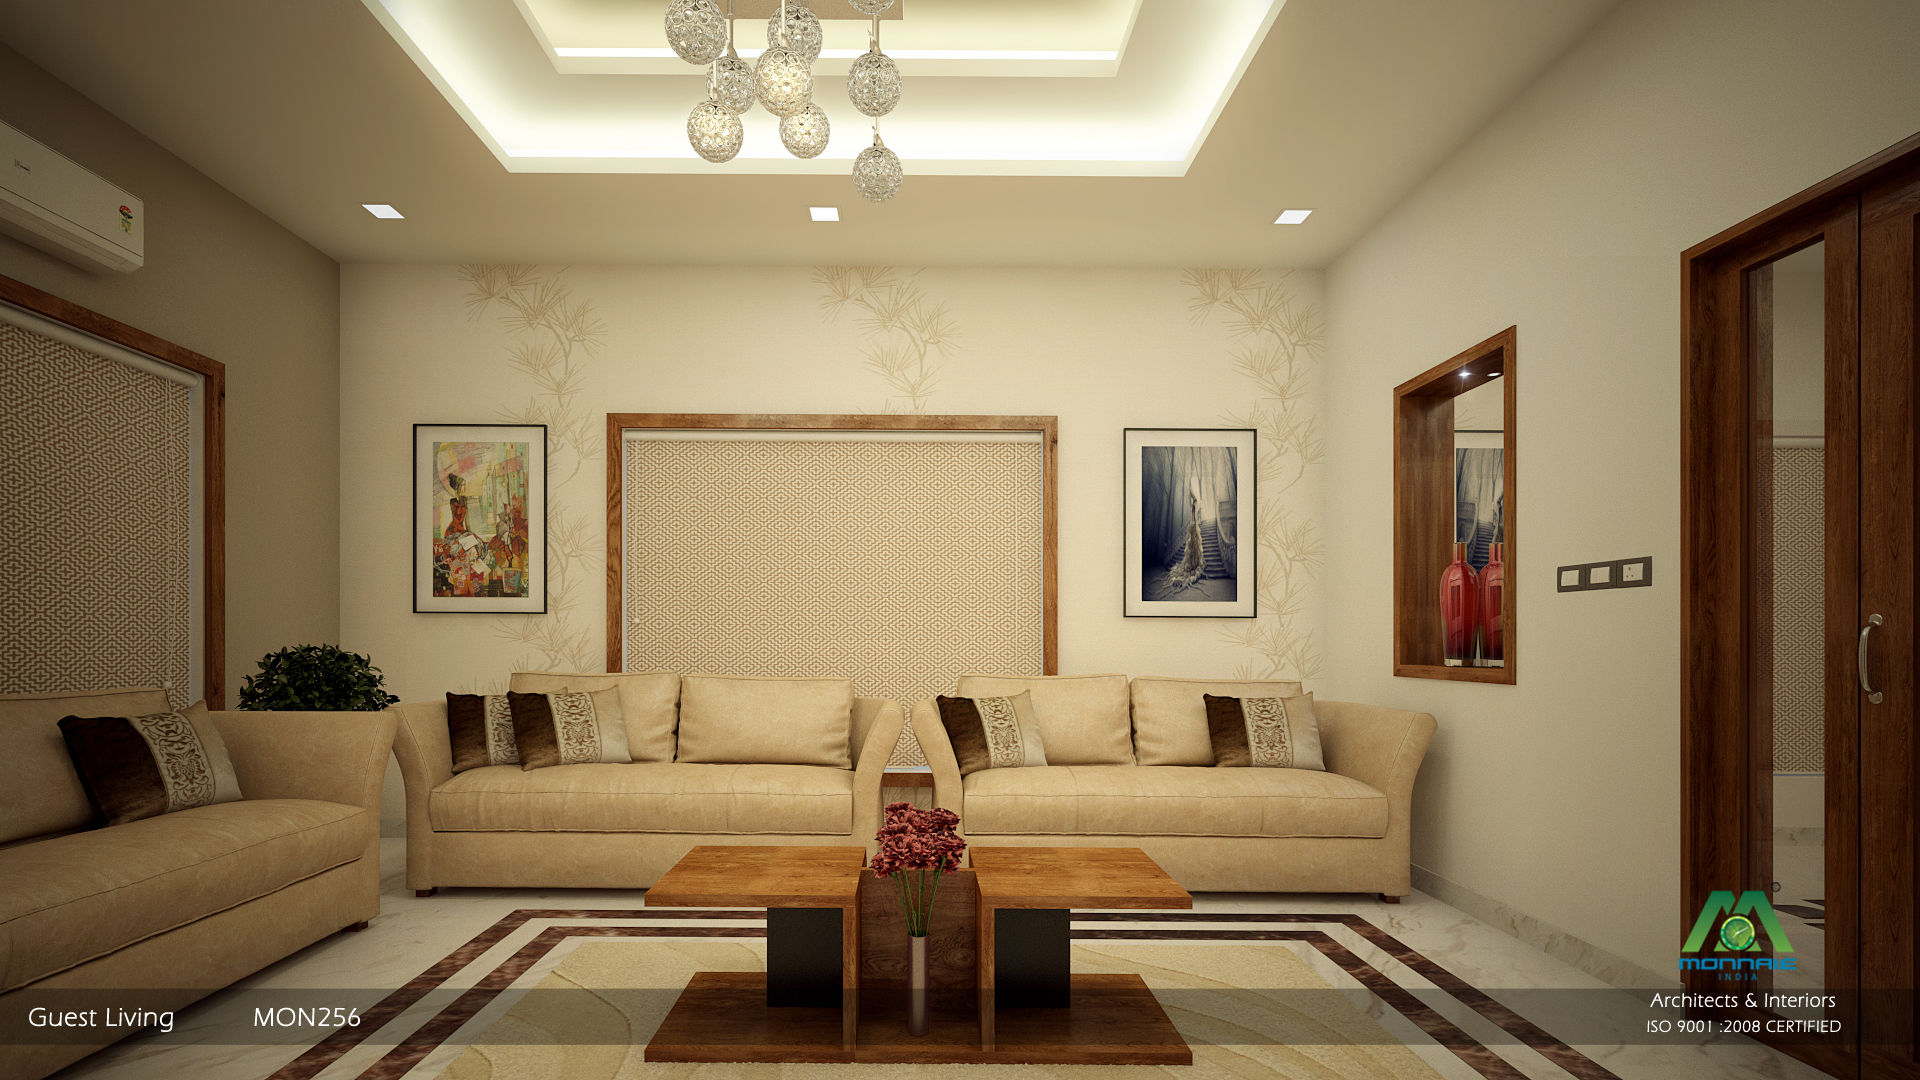 Awesome Attire, Premdas Krishna Premdas Krishna Living room